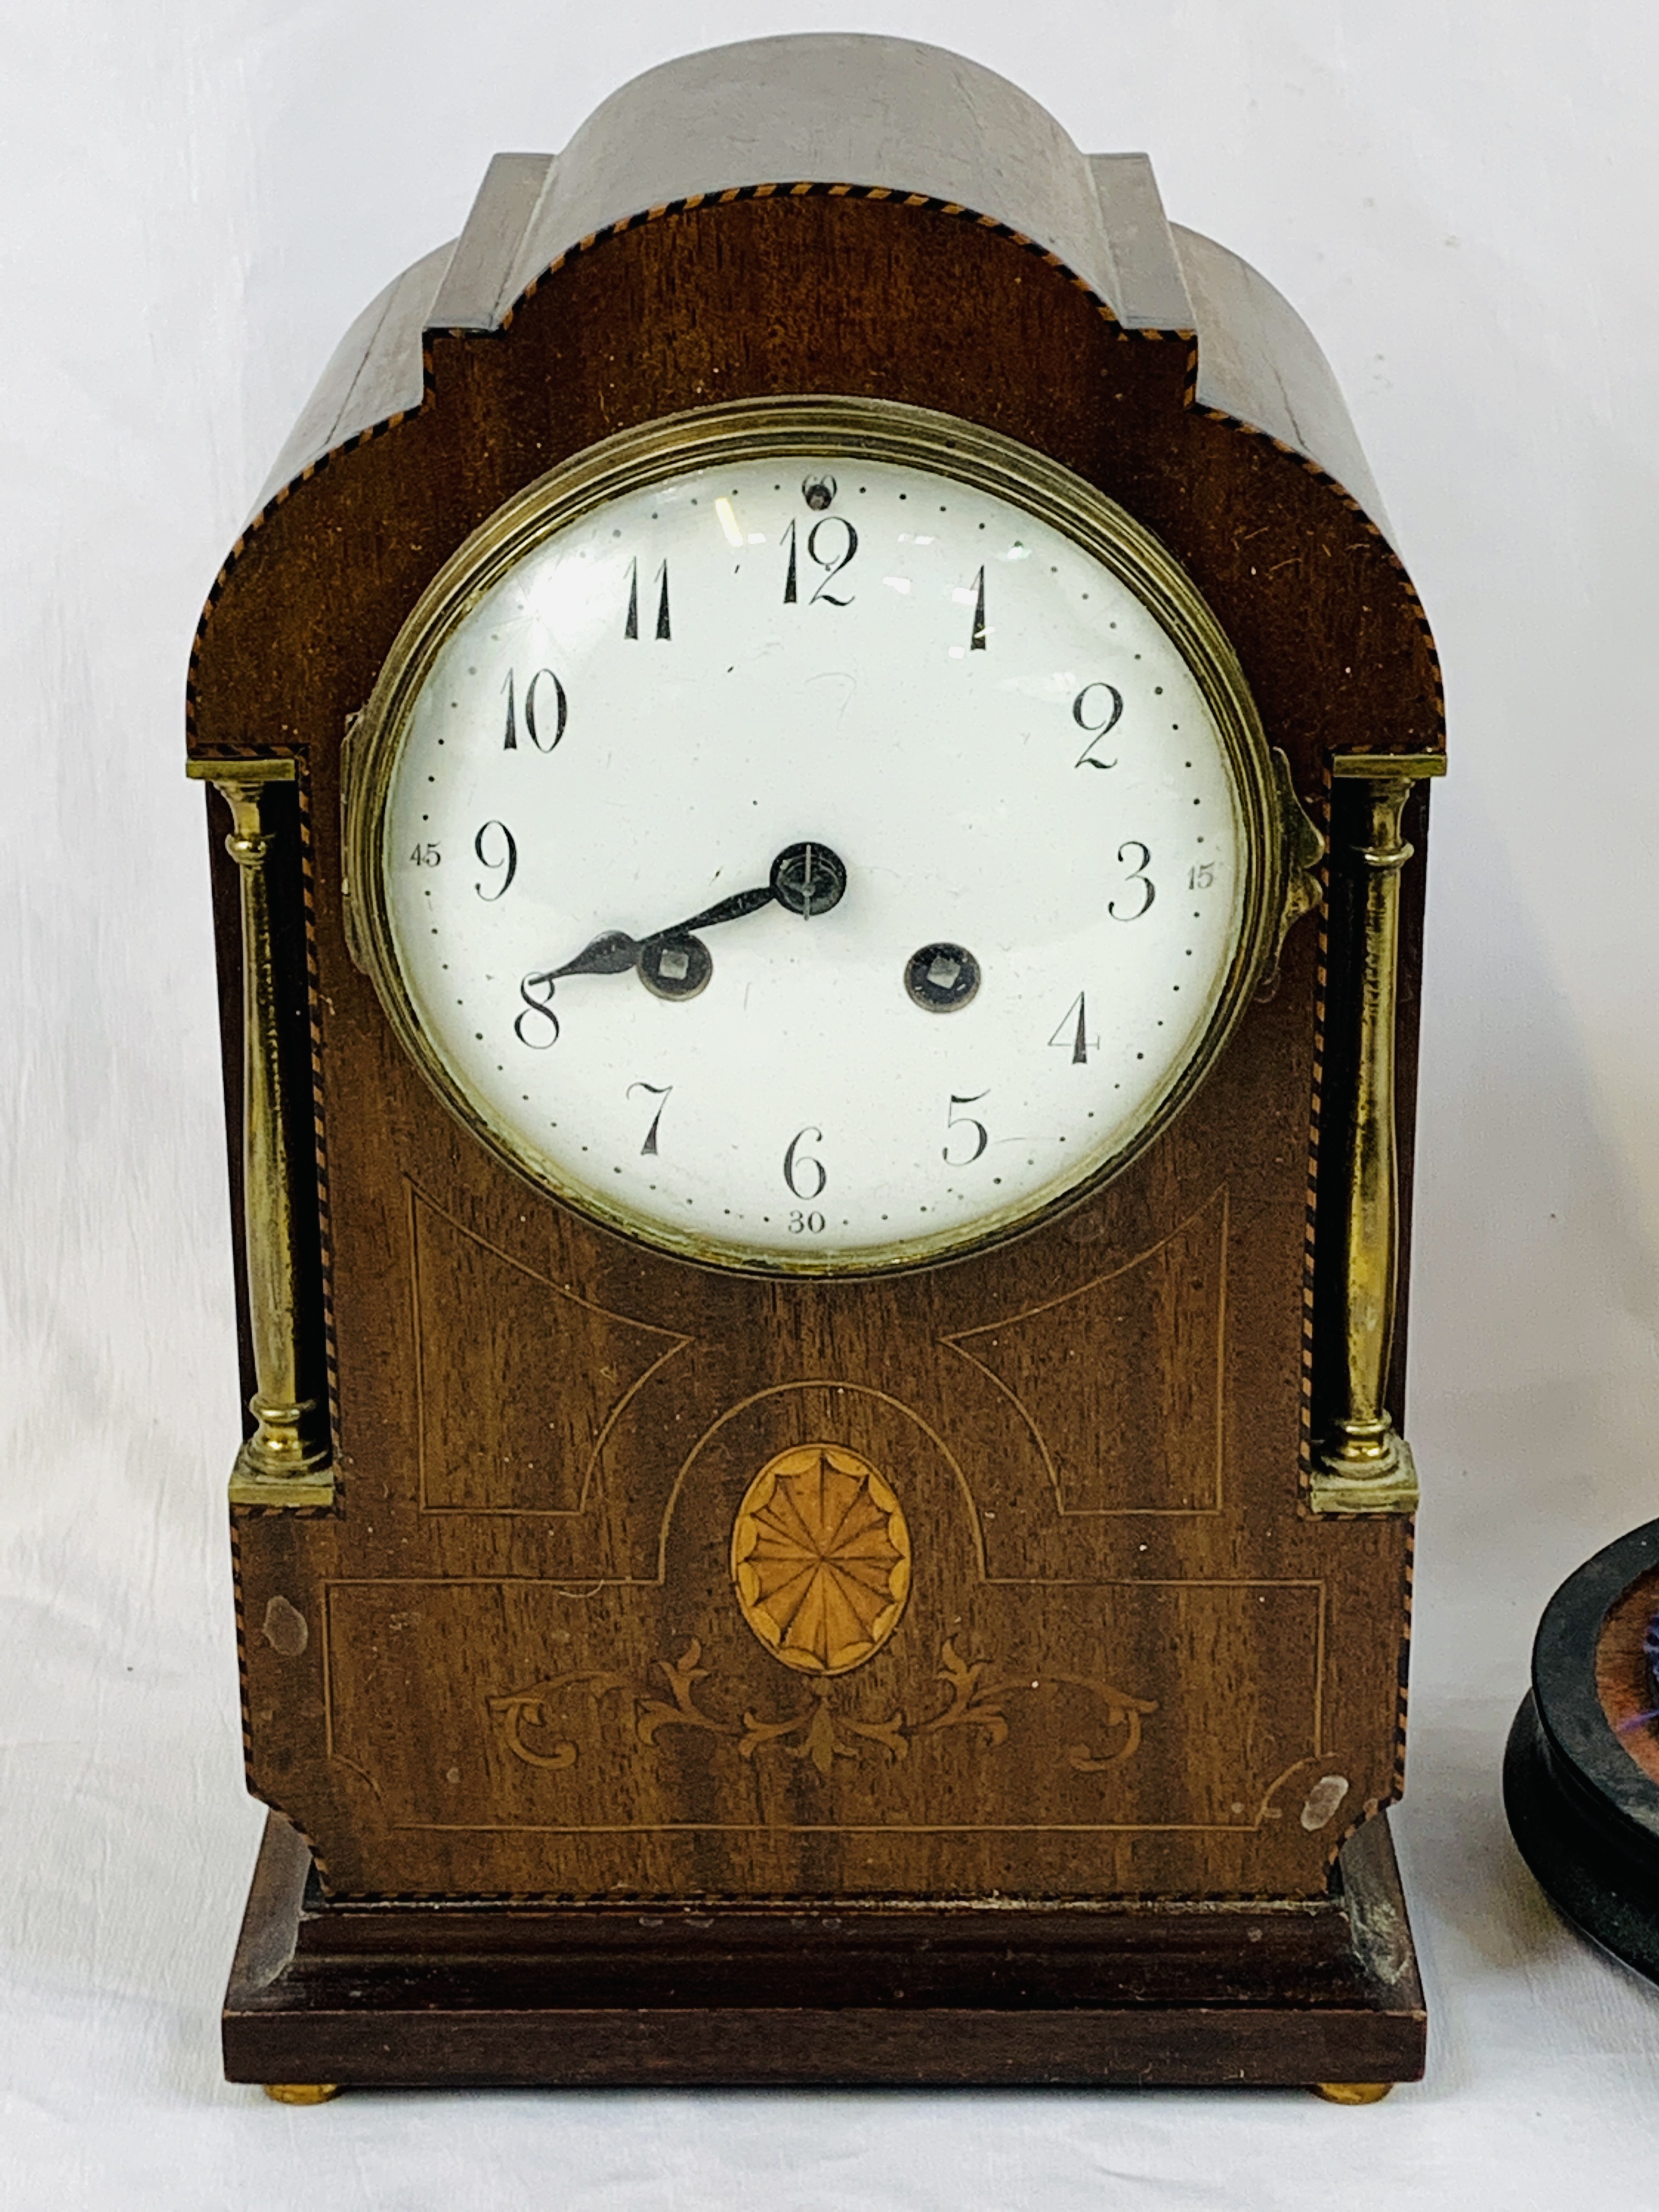 Mahogany mantel clock together with an ormolu mantel clock - Image 3 of 4